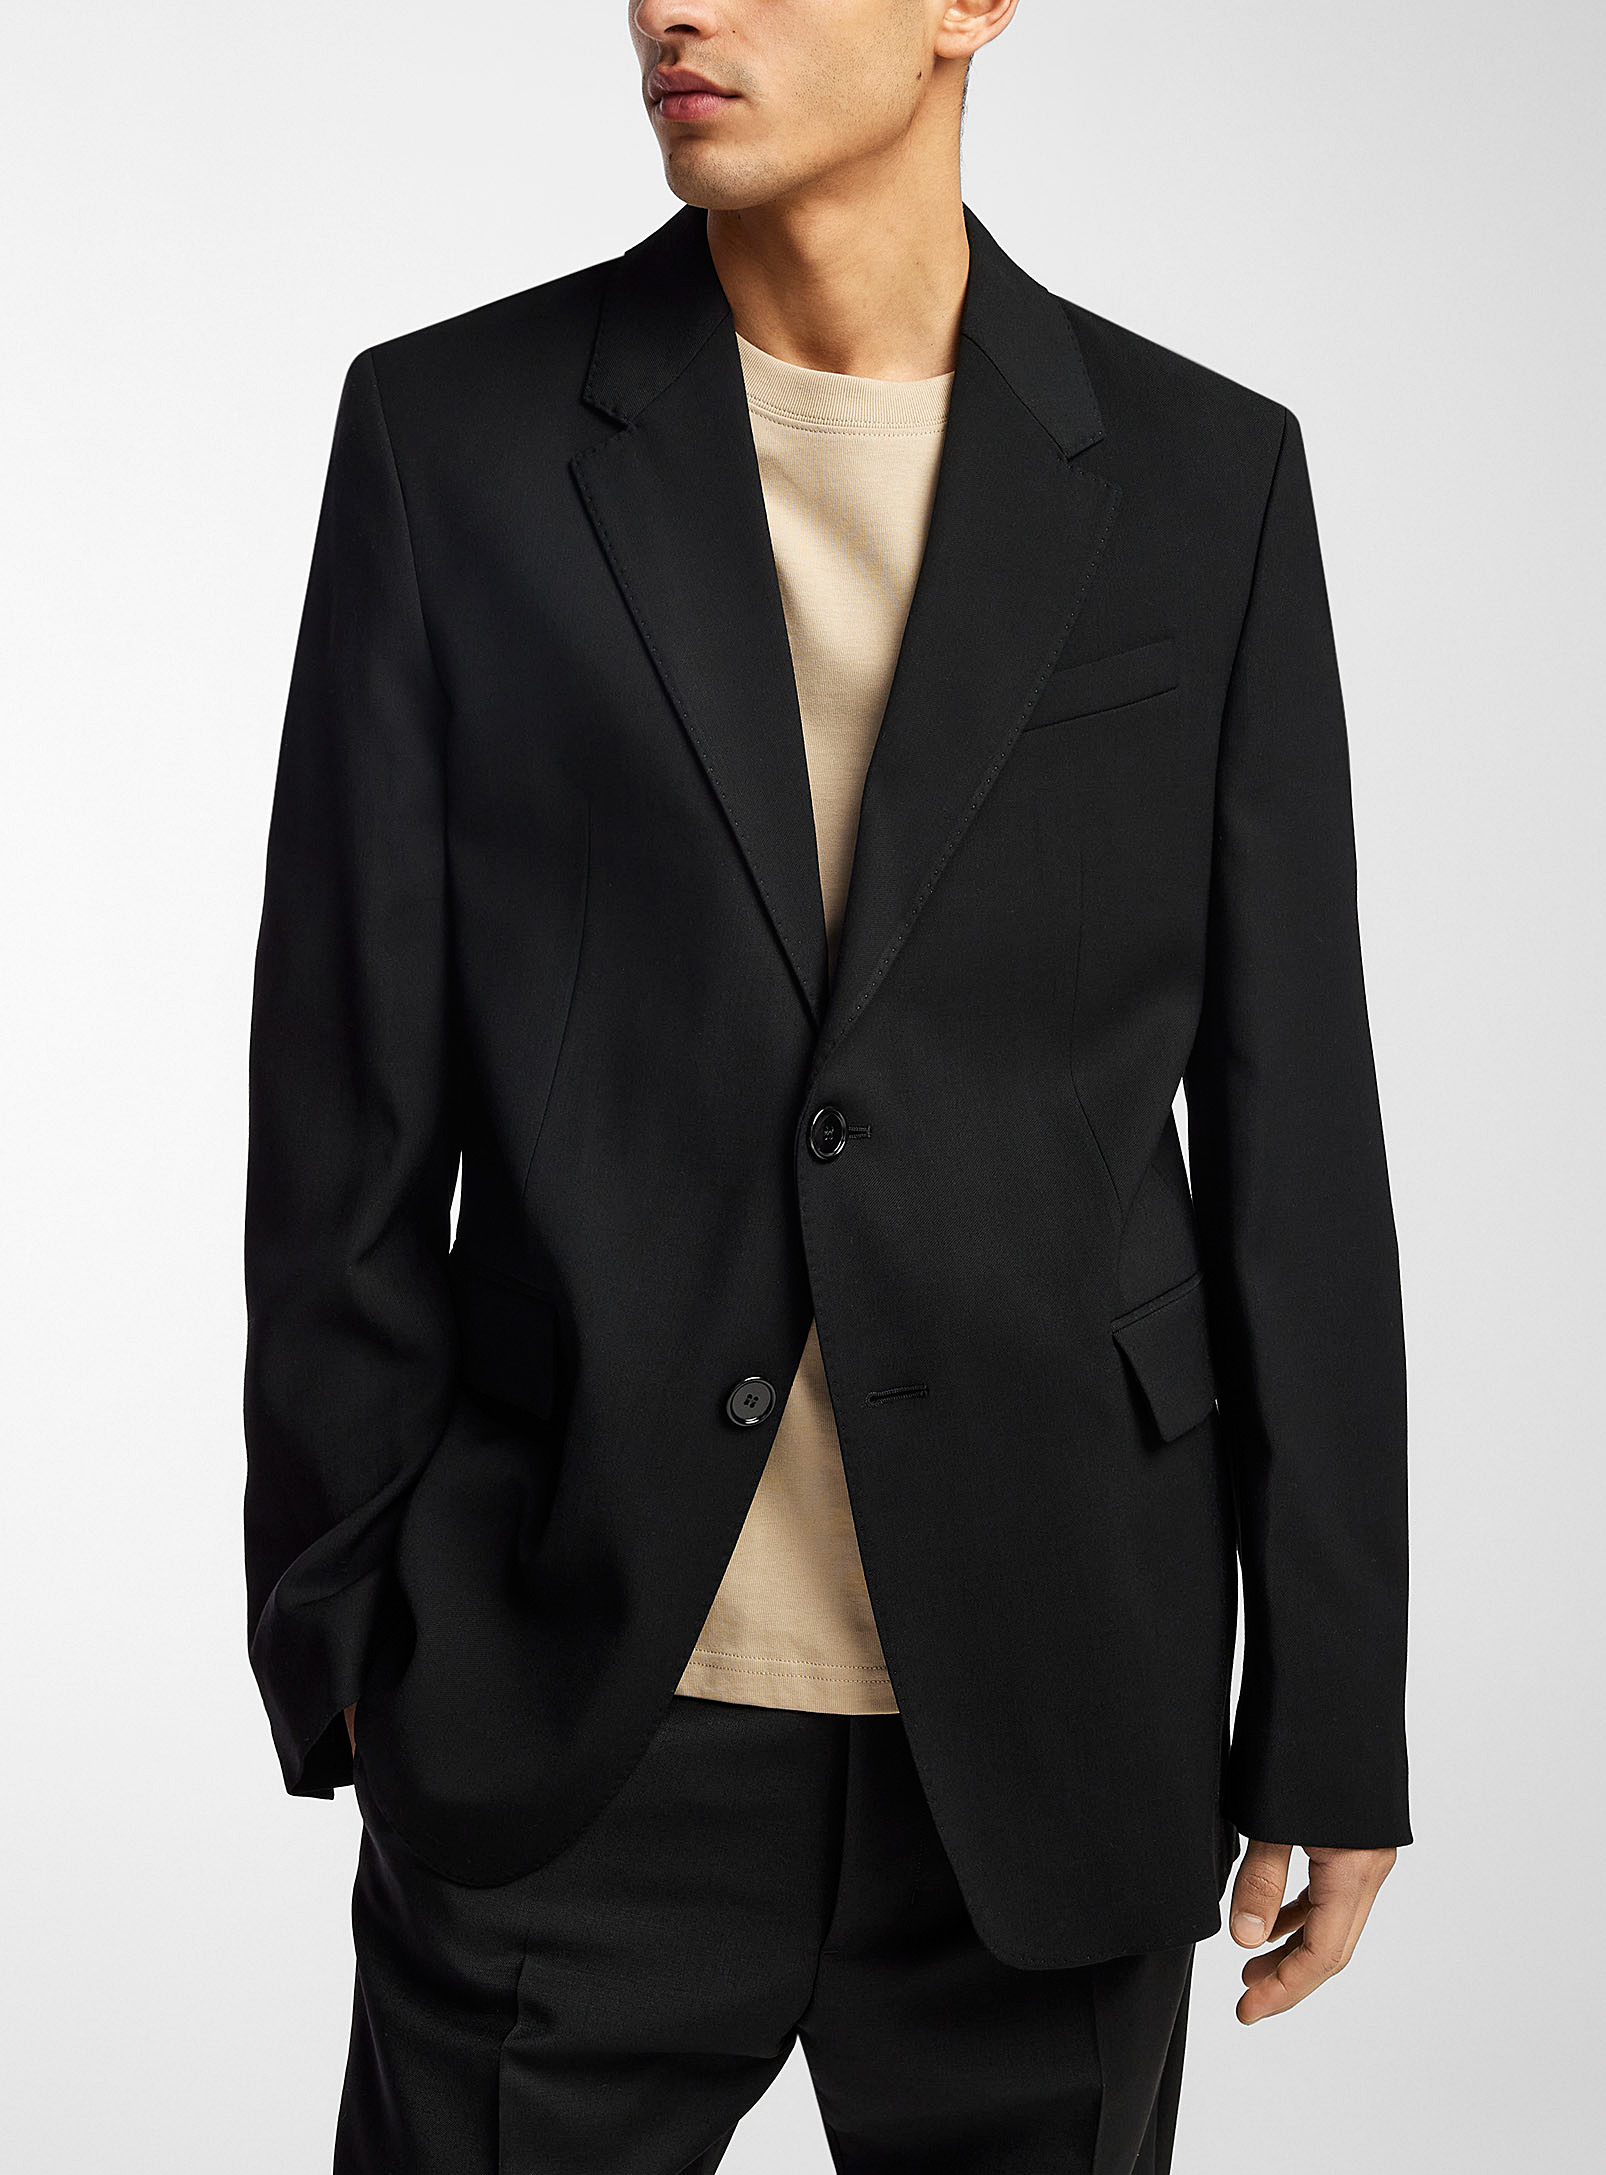 Ami - Men's Classic black twill jacket